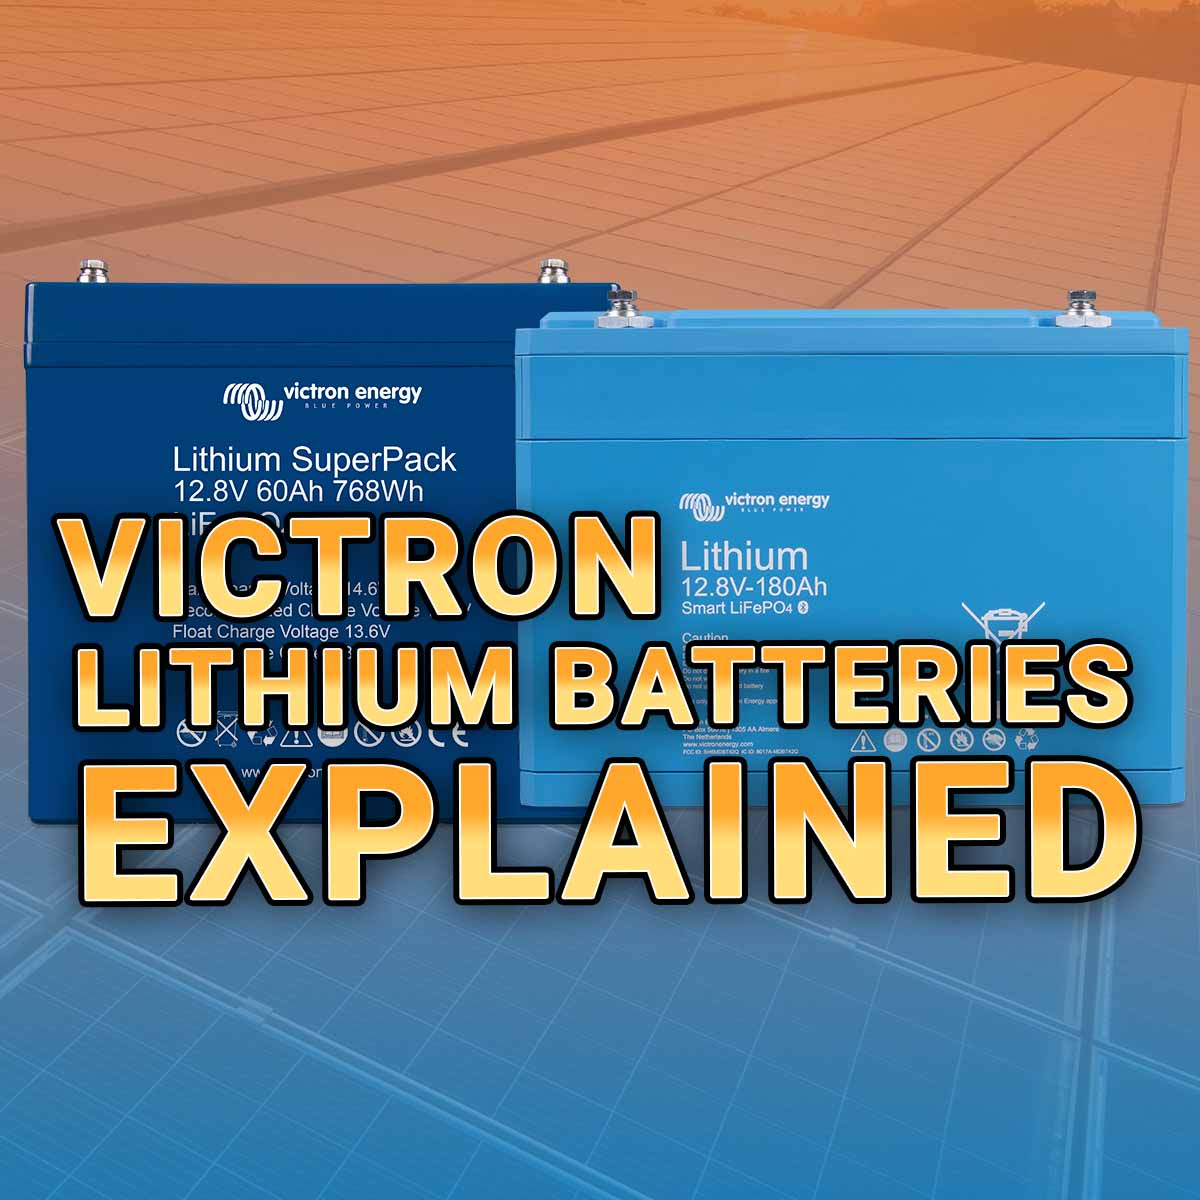 Battery balancer 24v install - Victron Community